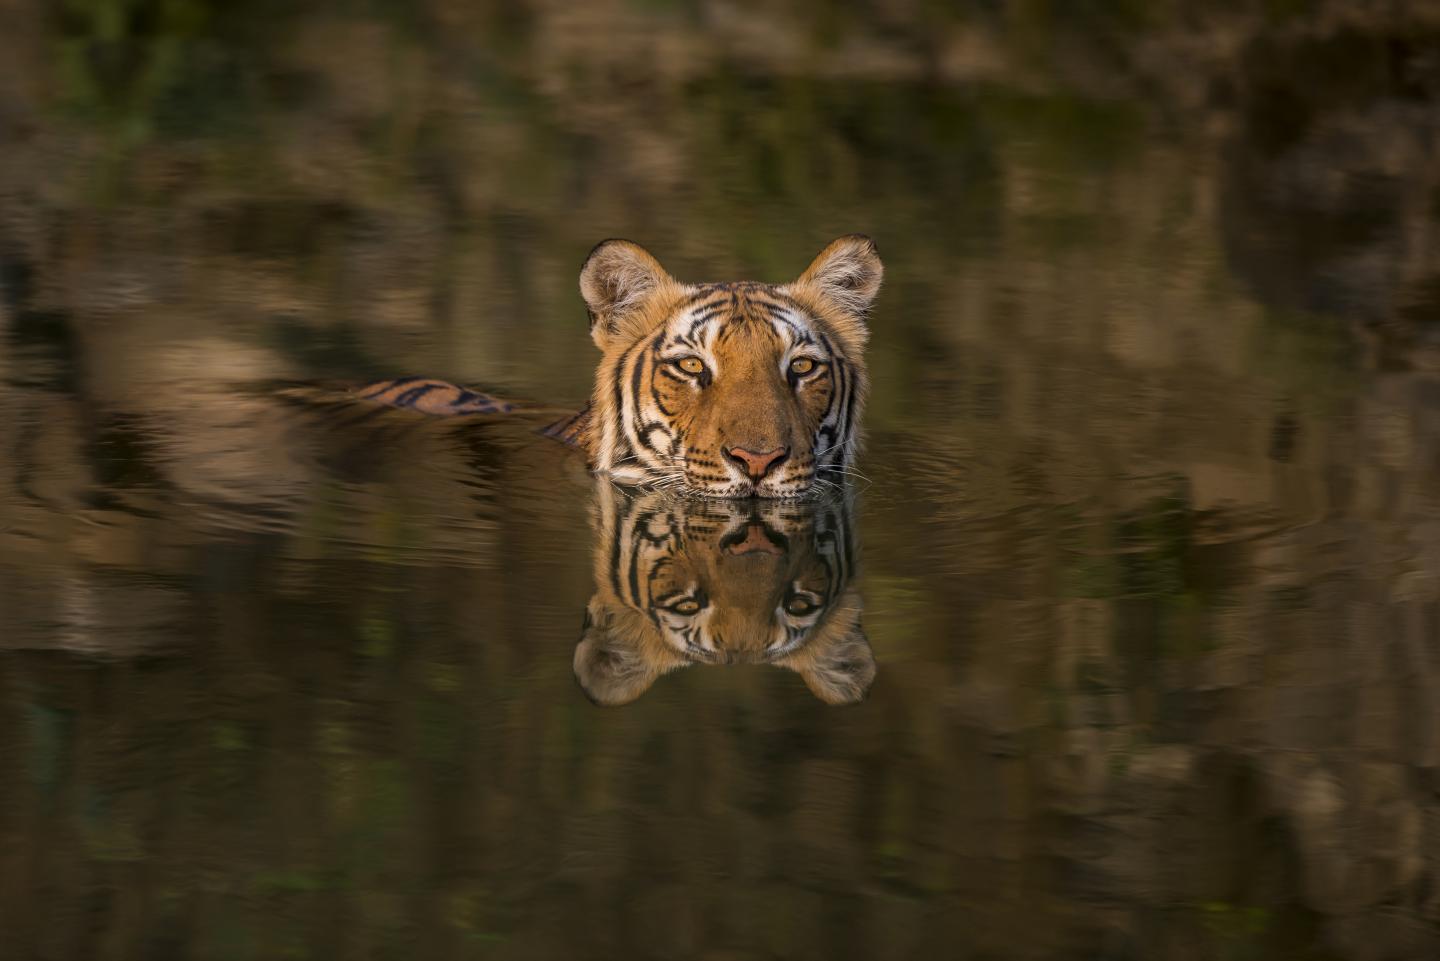 Swimming tiger.